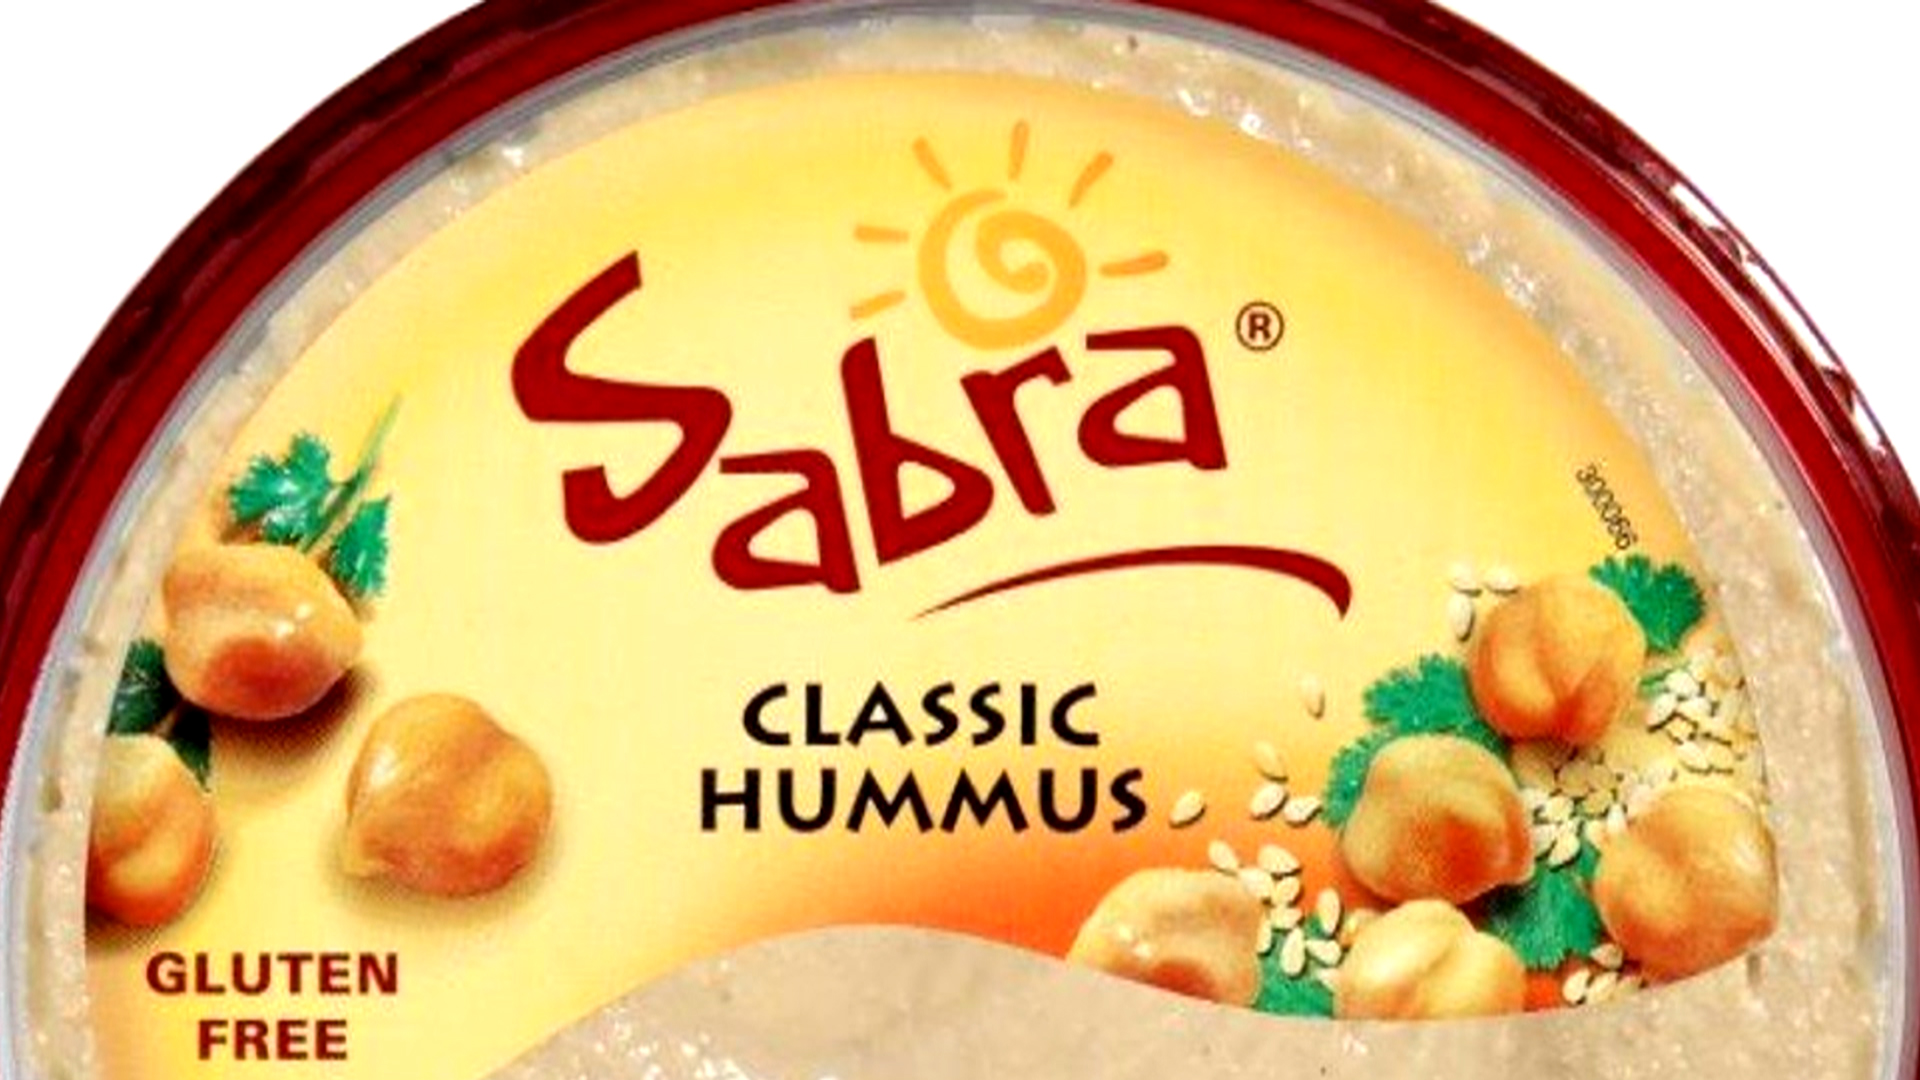 Sabra brand hummus recalled due to Listeria concerns